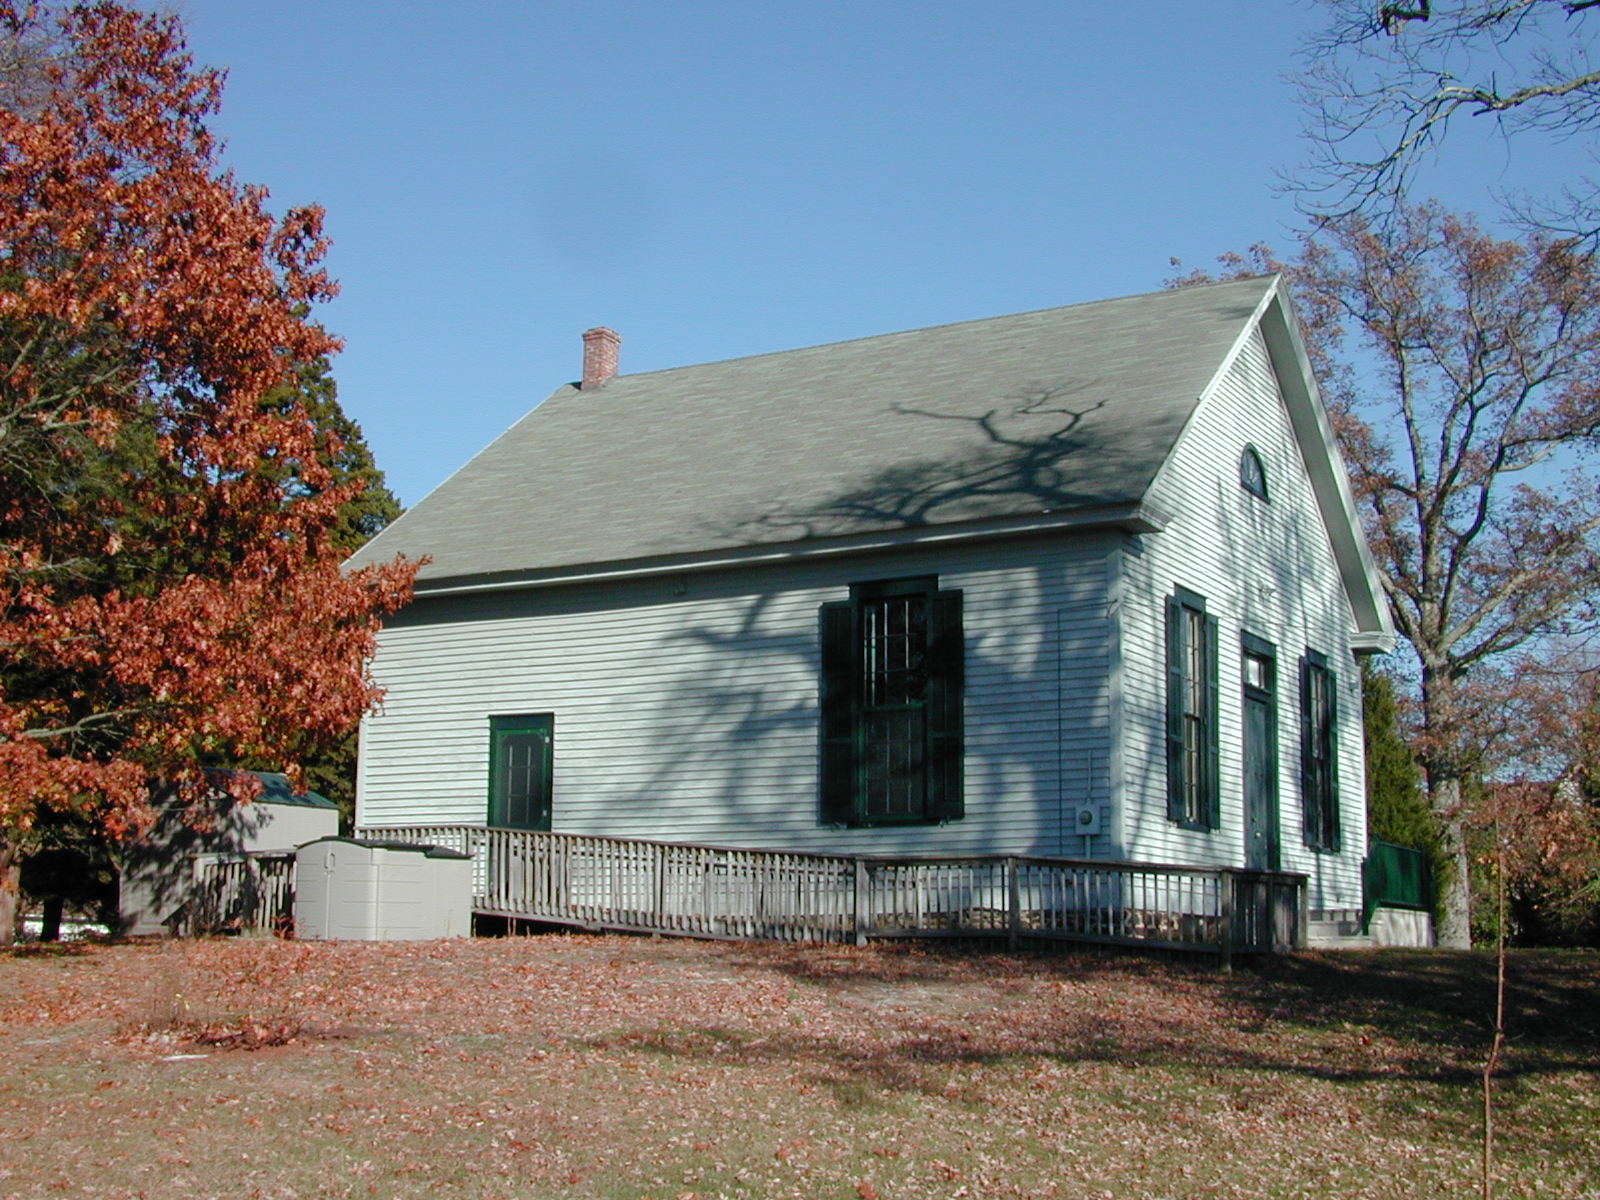 [Quaker Meeting House Image]